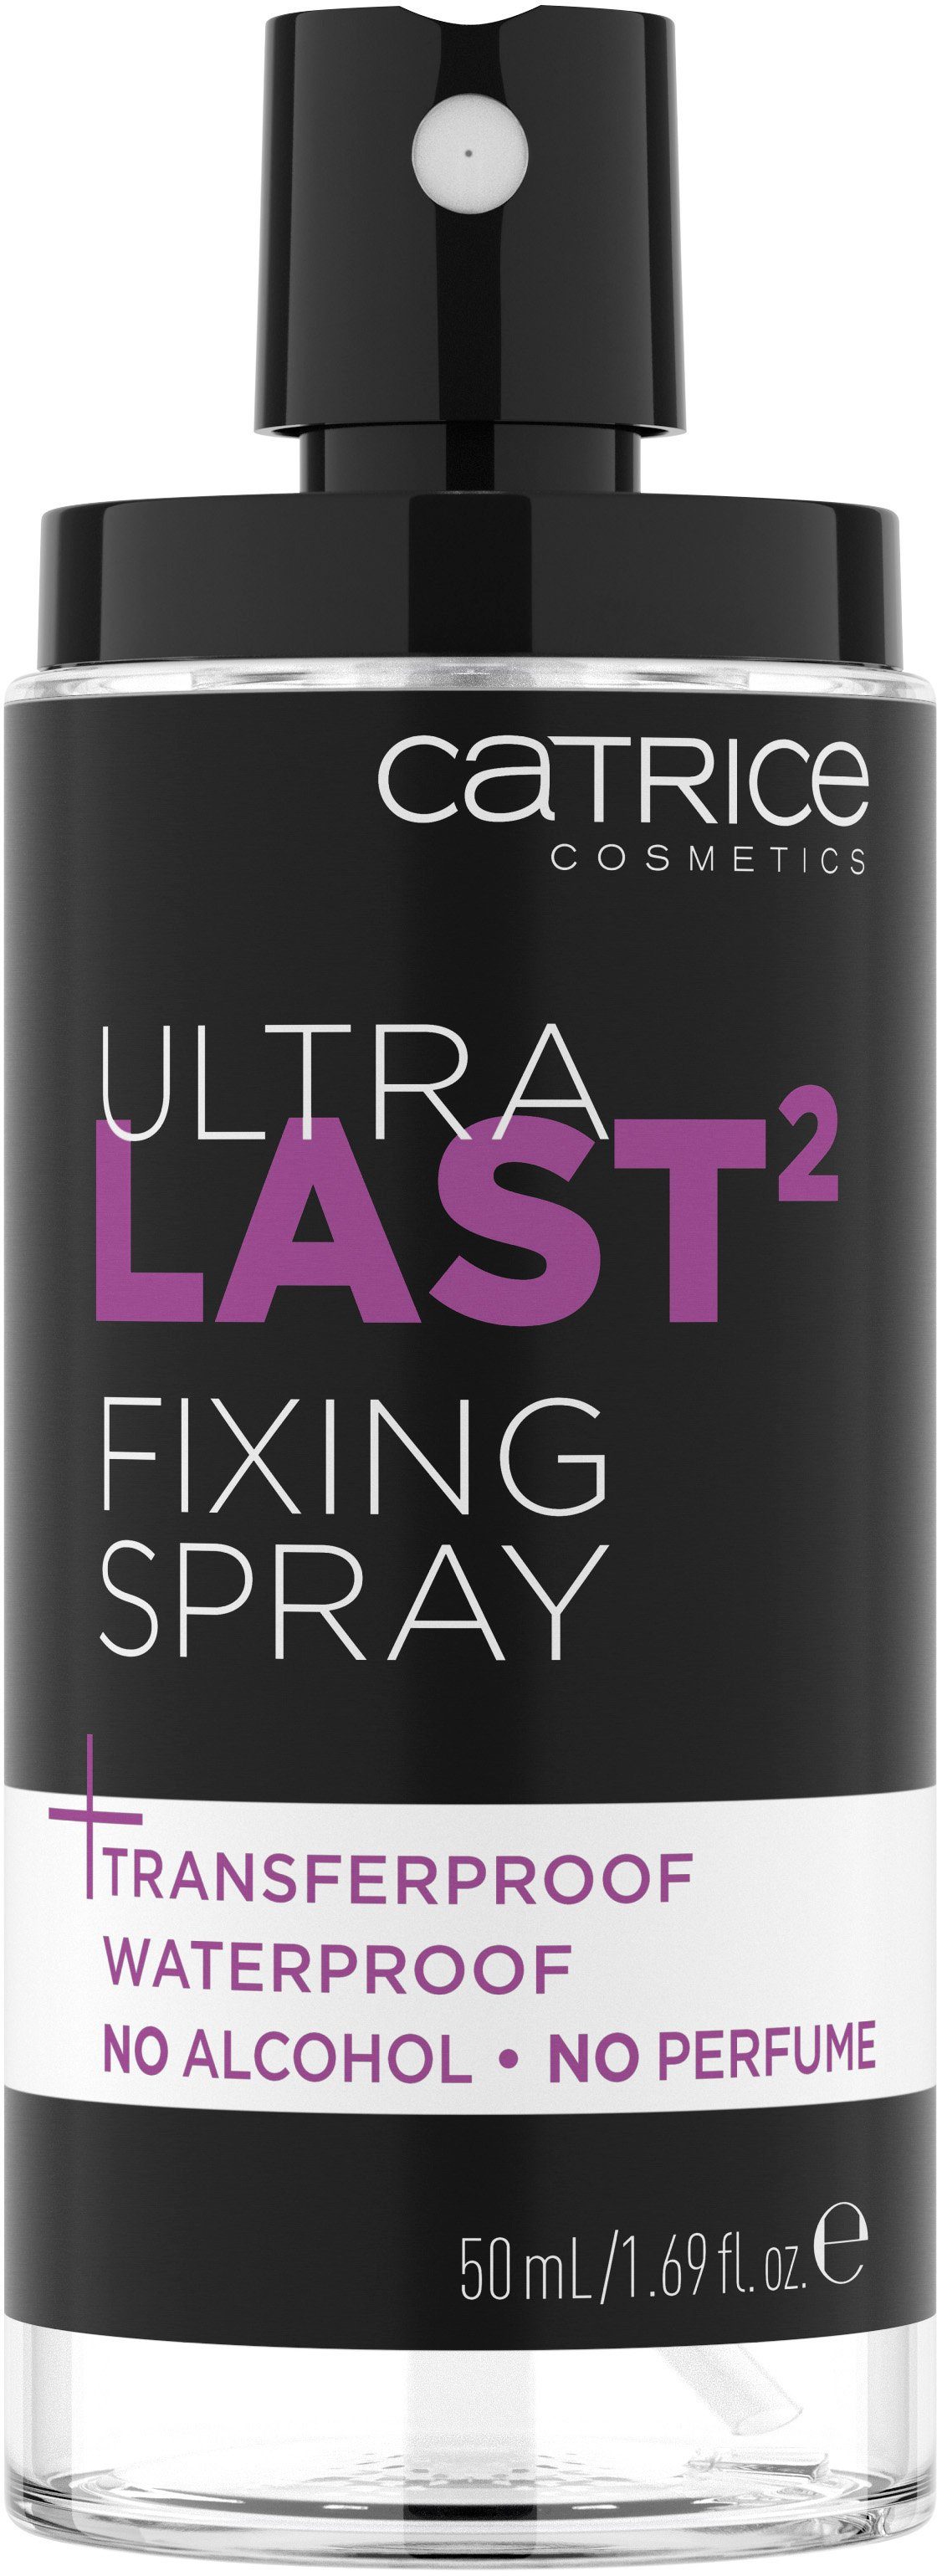 Last2 Catrice Spray, Fixing 3-tlg. Fixierspray Ultra